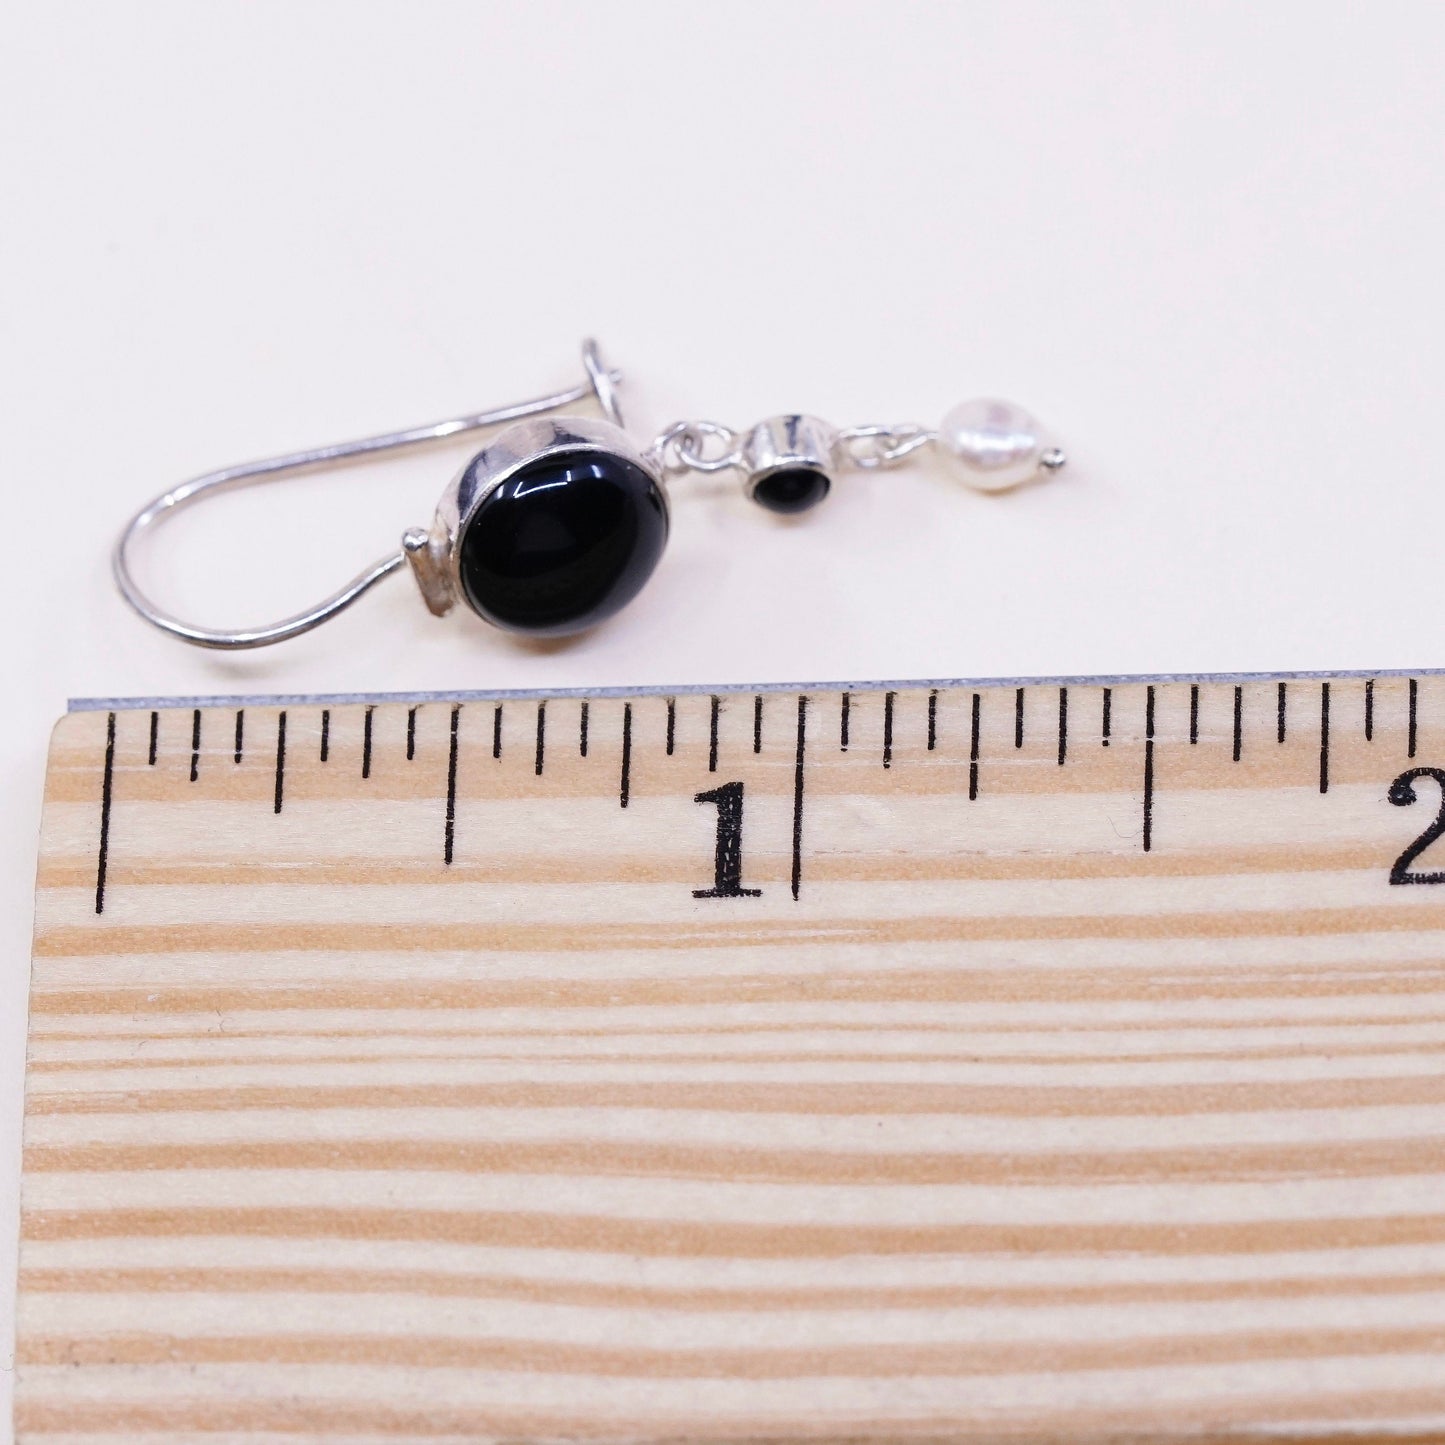 vtg Sterling silver handmade earrings, 925 w/ obsidian and pearl drops, elegant